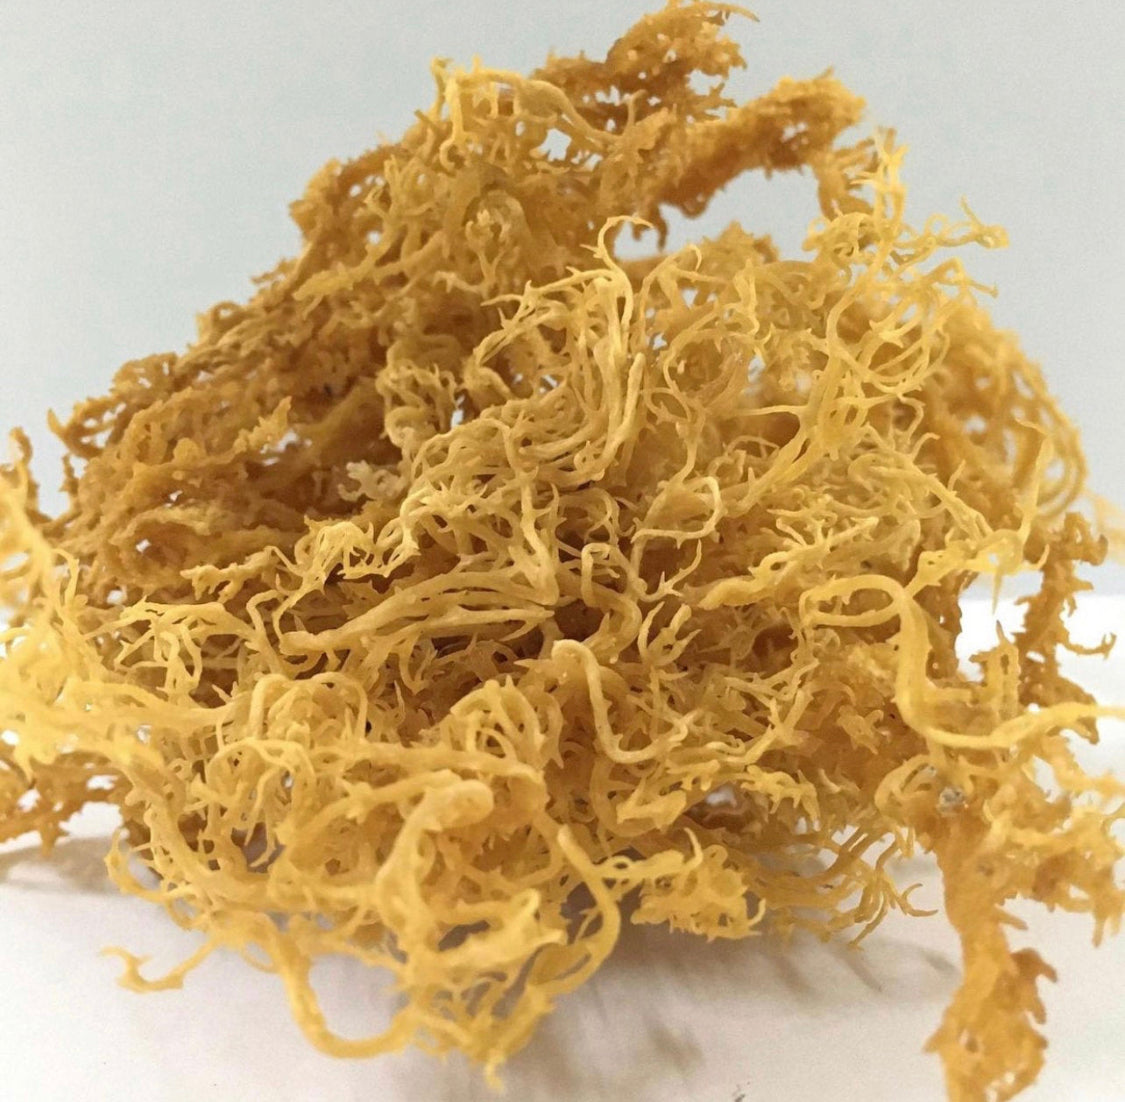 Irish Sea Moss – Bulk Epsom Salts